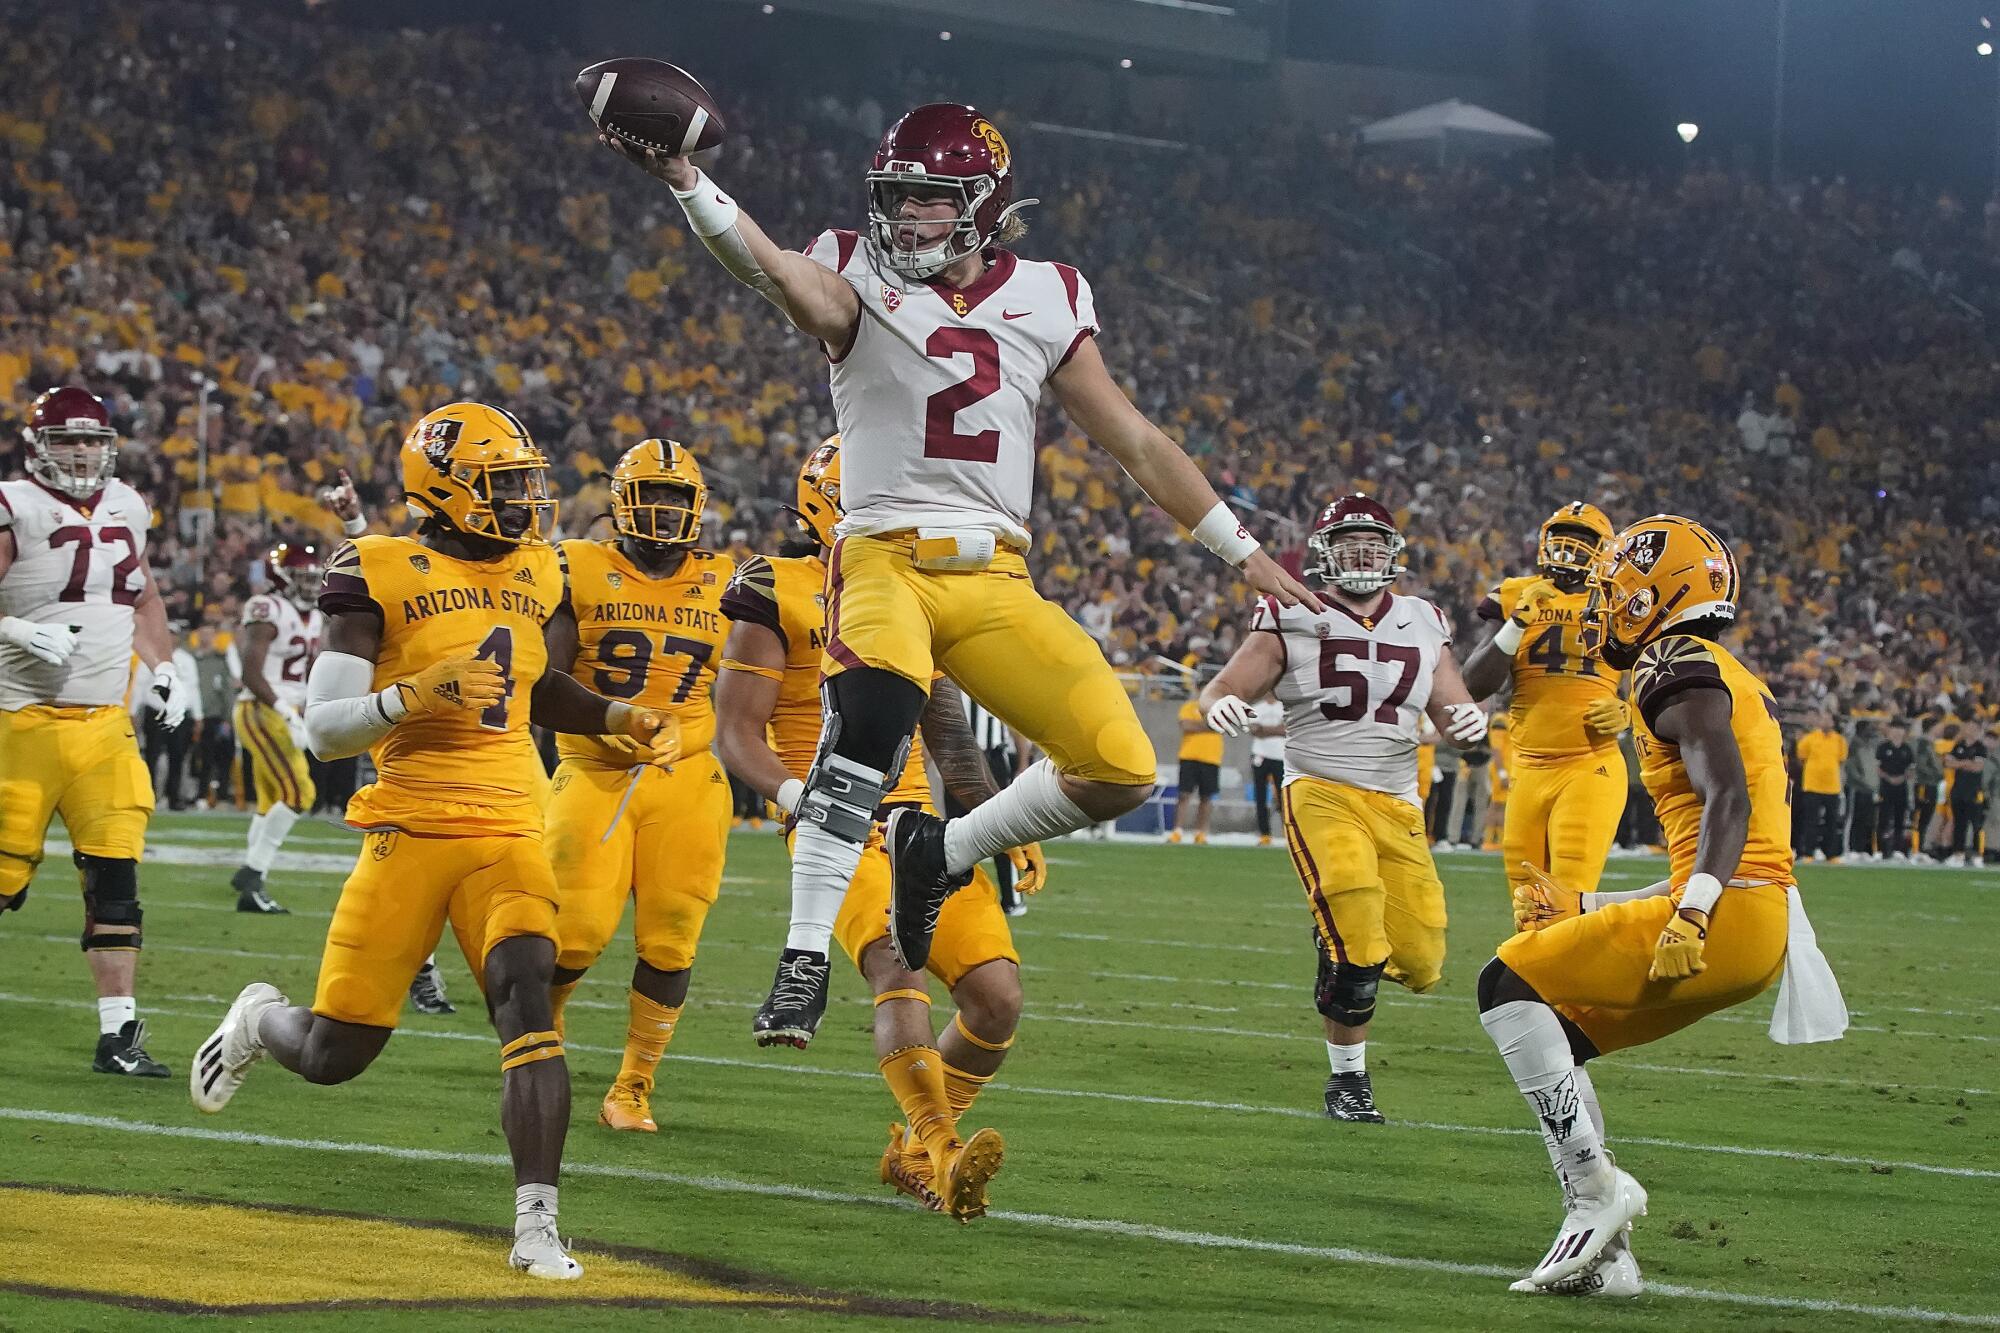 USC quarterback Jaxson Dart celebrates after running for a touchdown against Arizona State 